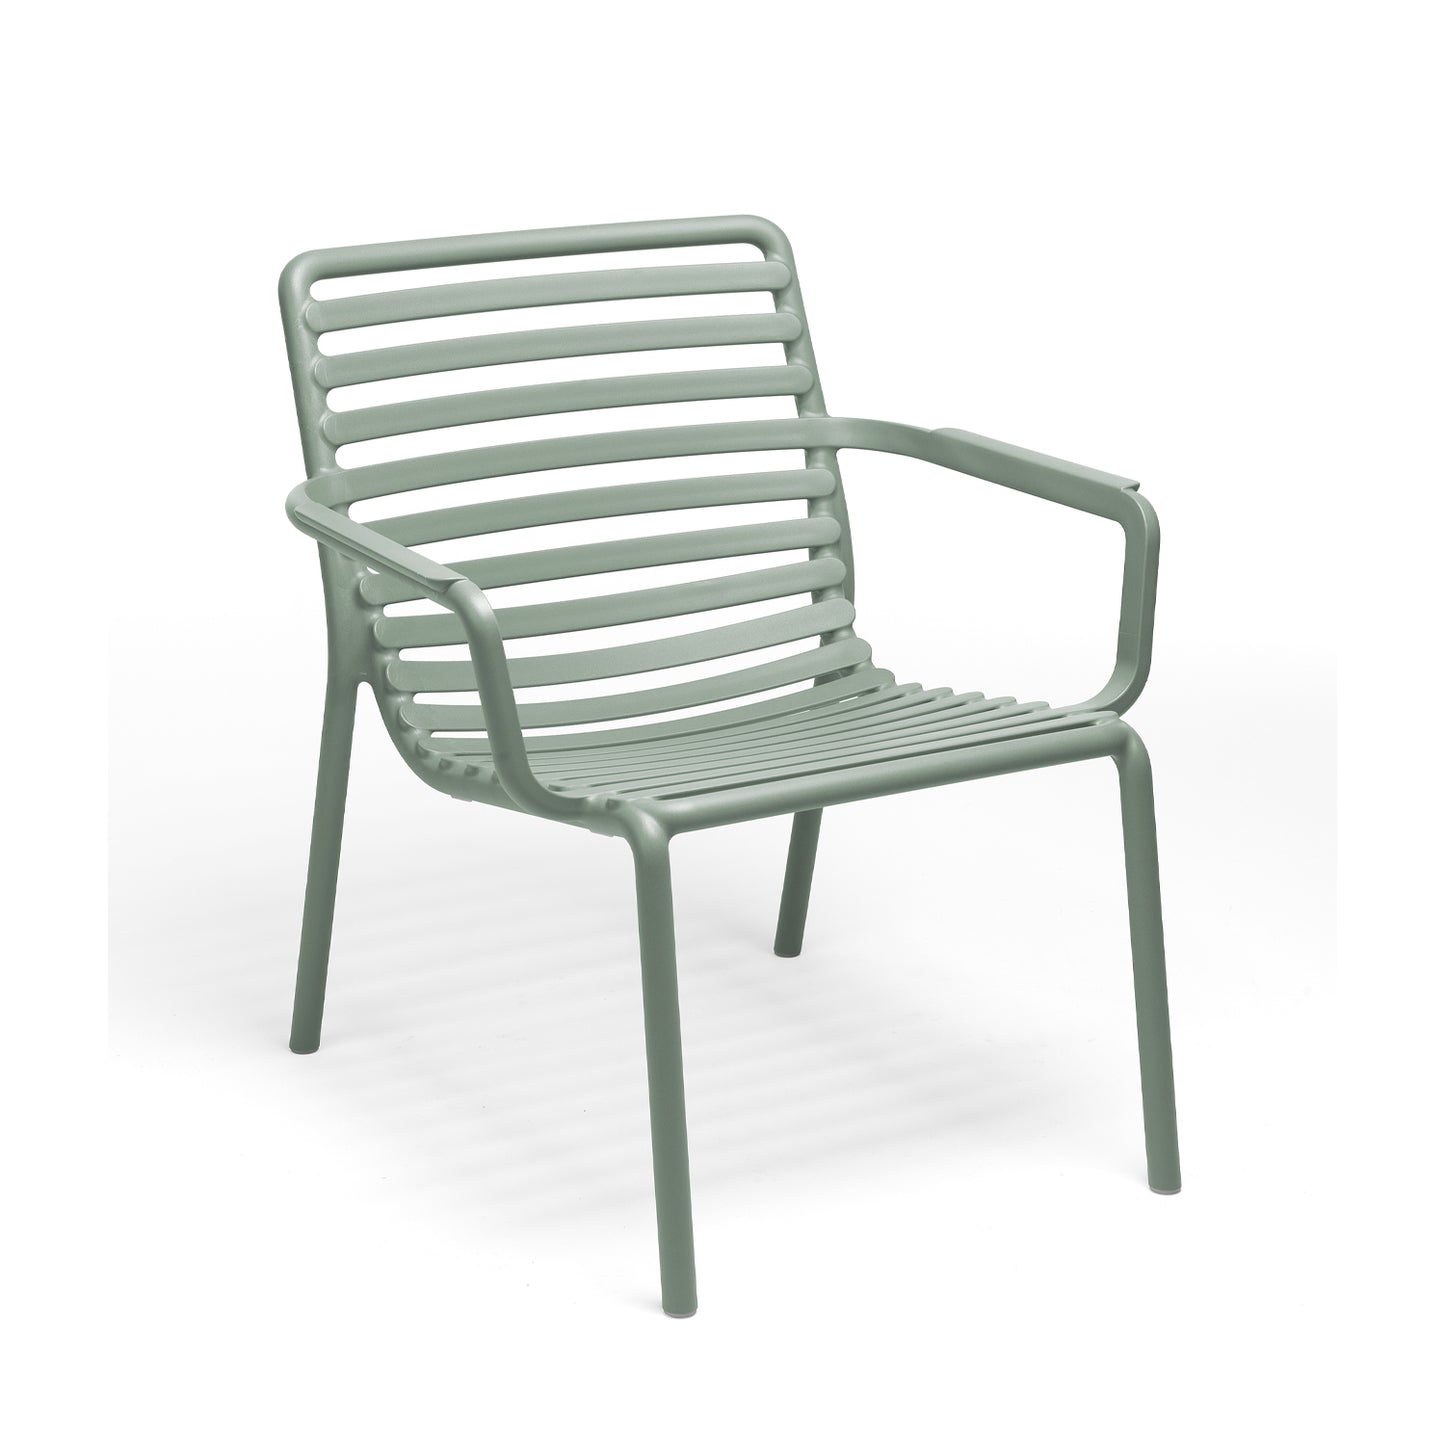 Doga Relax Garden Chair By Nardi - Set Of 4 Mint